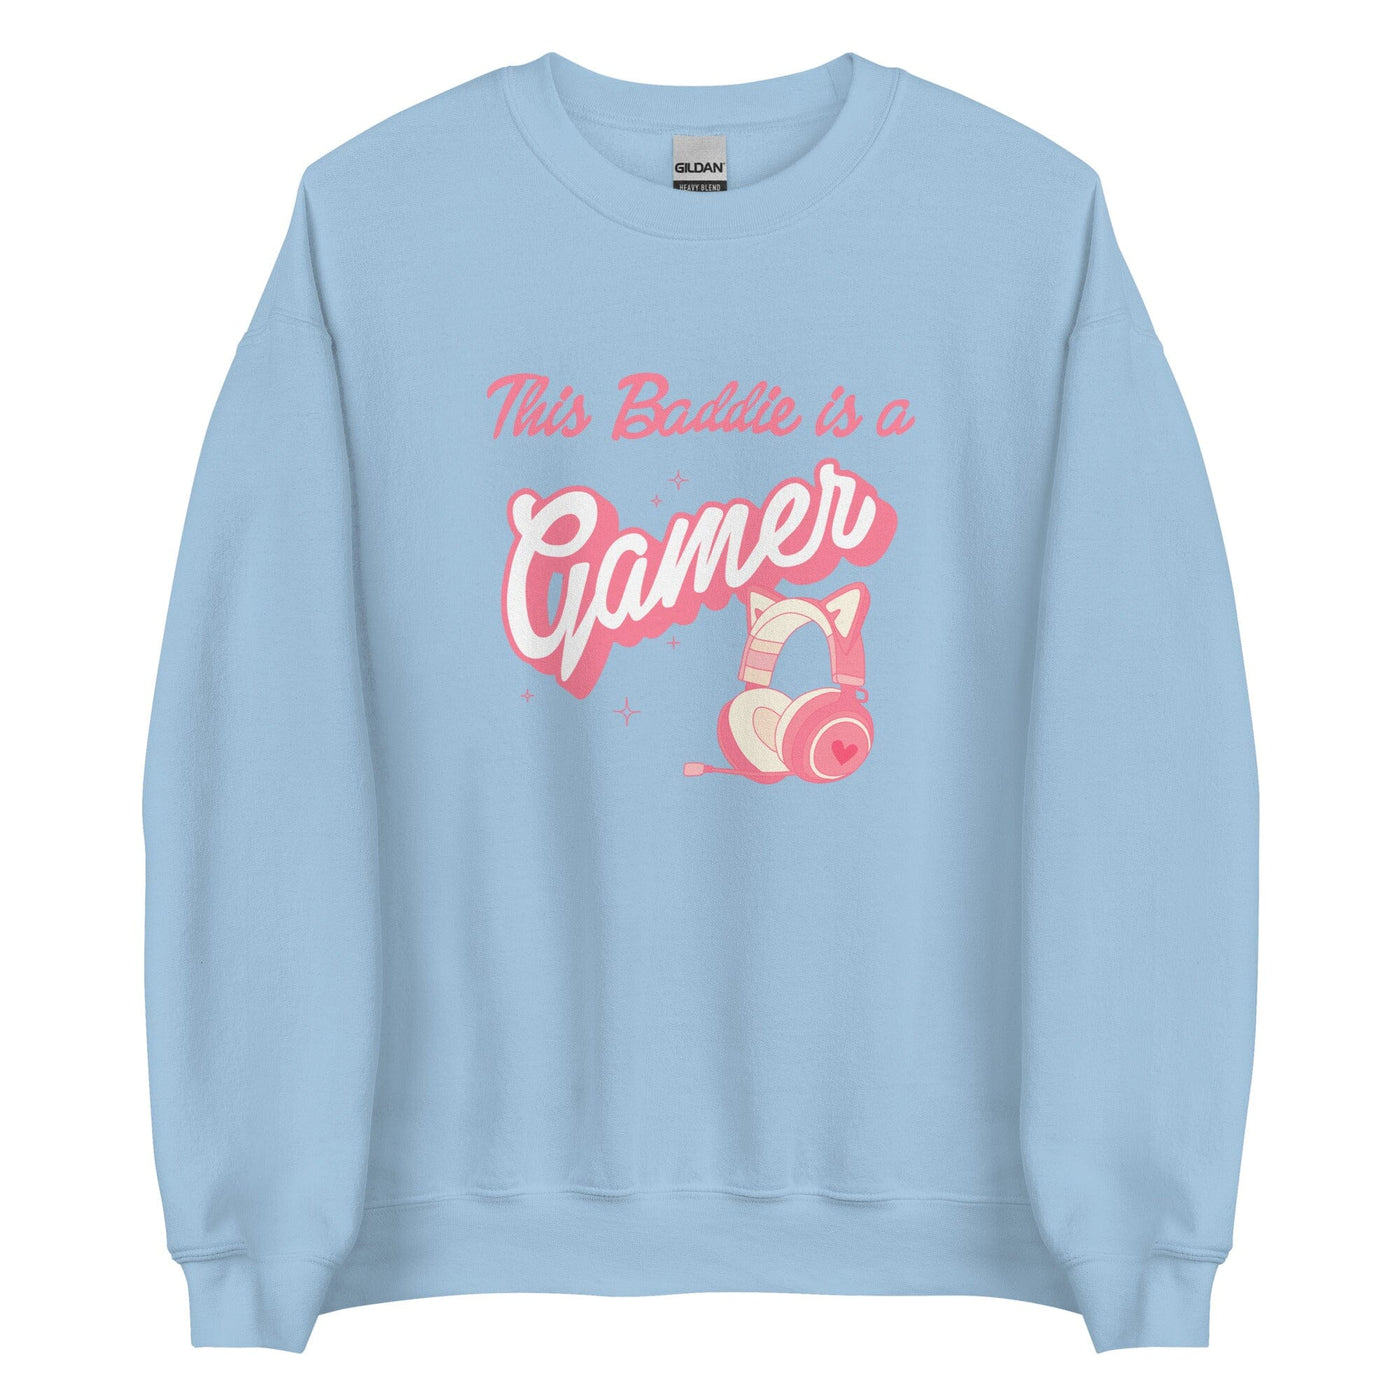 This Baddie is a Gamer | Unisex Sweatshirt | Feminist Gamer Threads & Thistles Inventory Light Blue (Girly Girl) S 